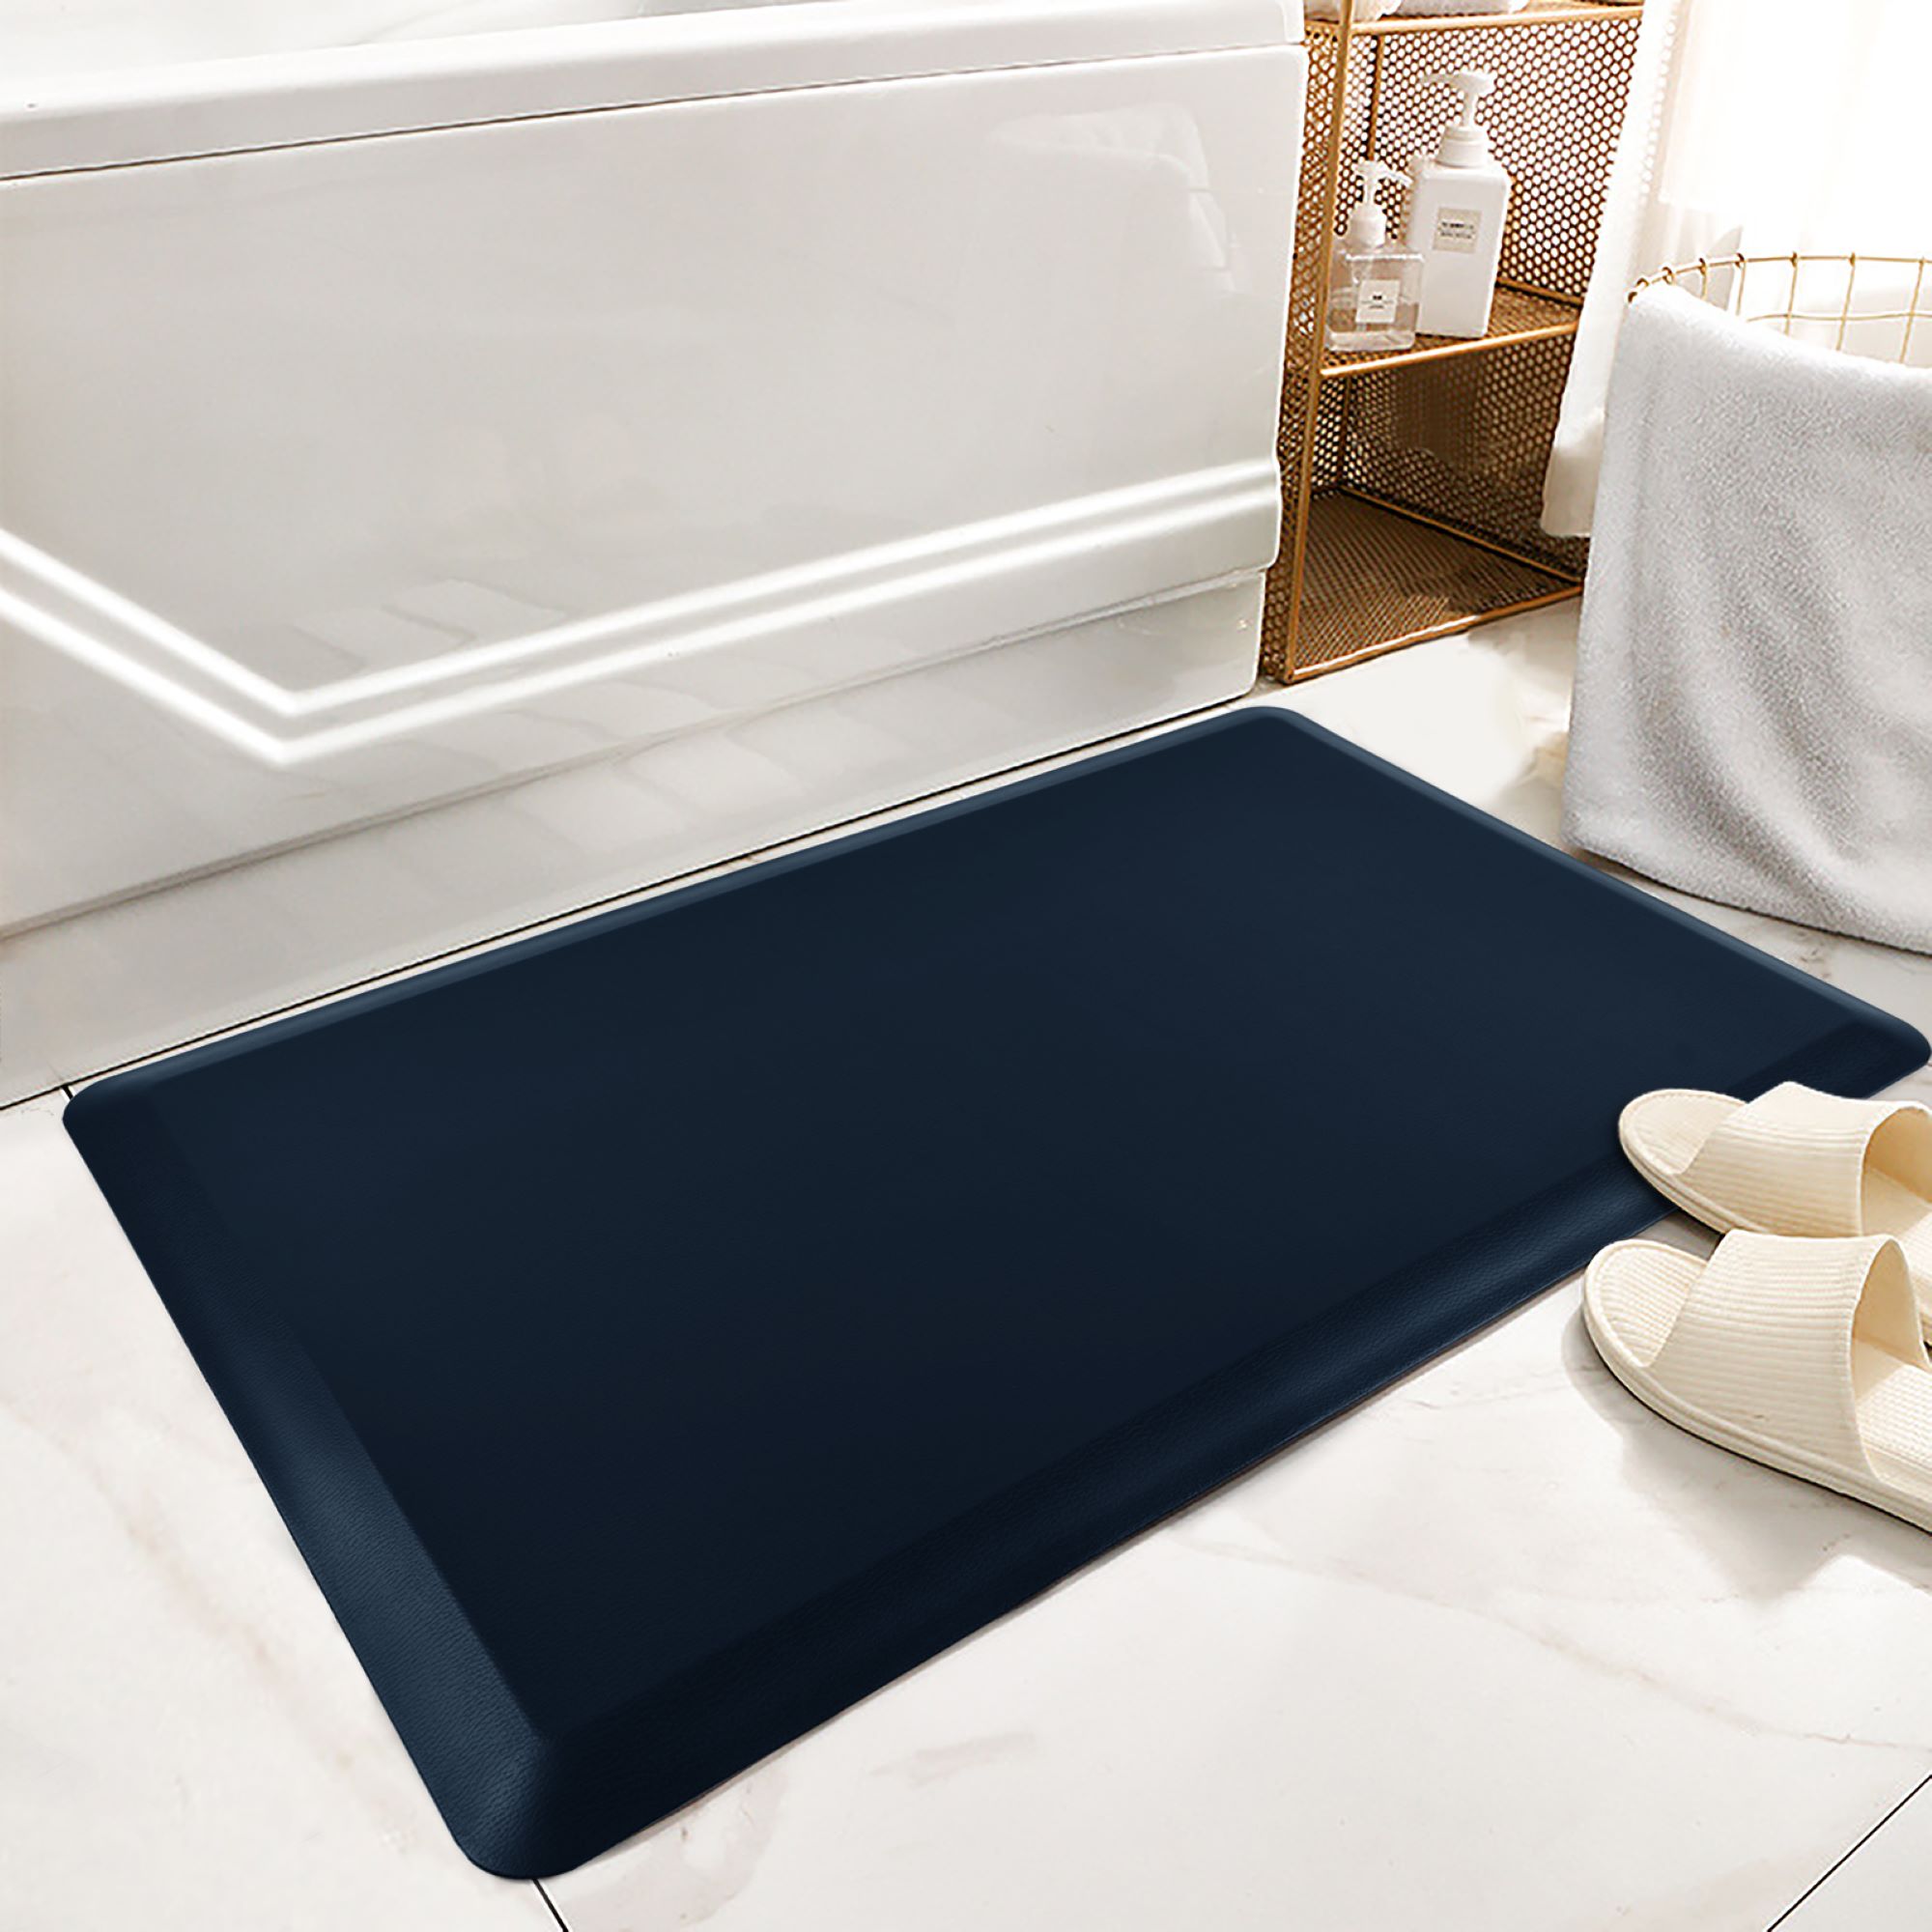 Y12001MB-Art3d Anti Fatigue Mat - 1/2 Inch Cushioned Kitchen Mat - Non Slip  Foam Comfort Cushion for Standing Desk, Office or Garage Floor (17.3x28,  Majolica Blue)